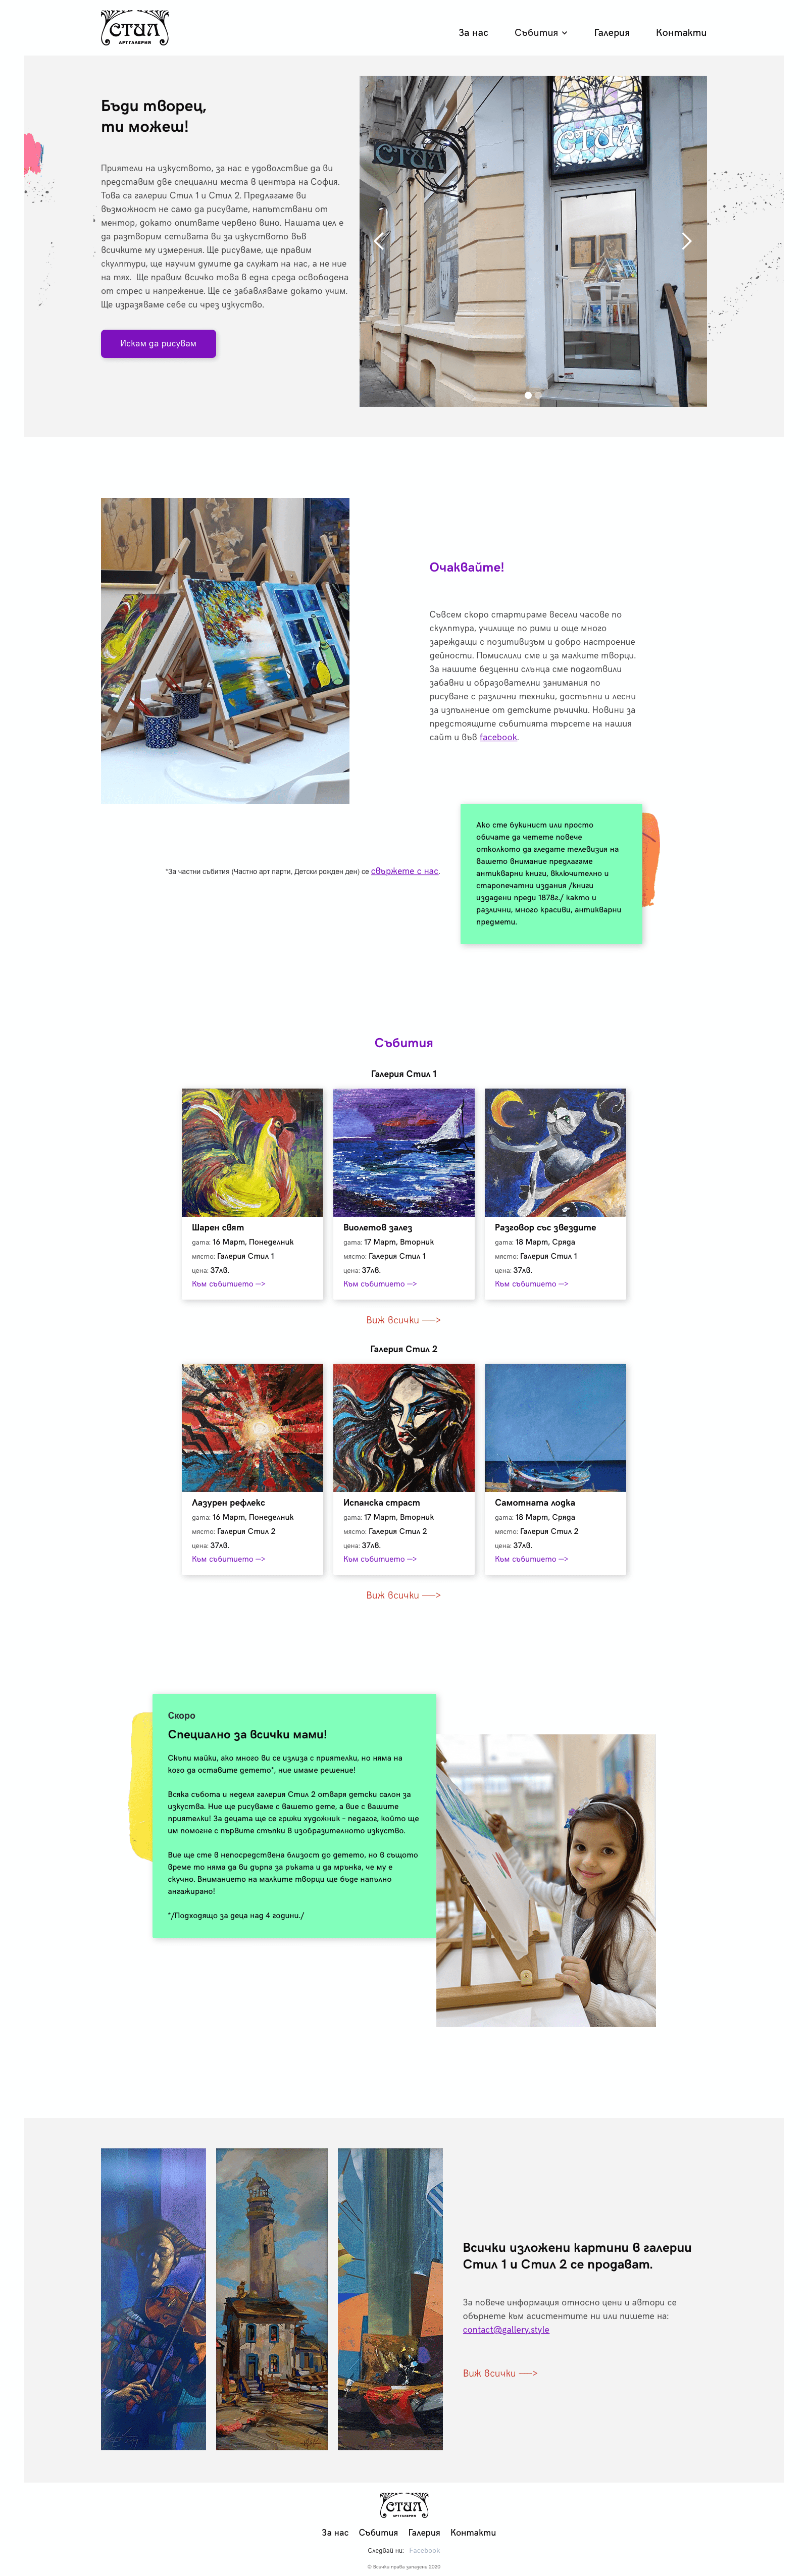 Gallery Style Website